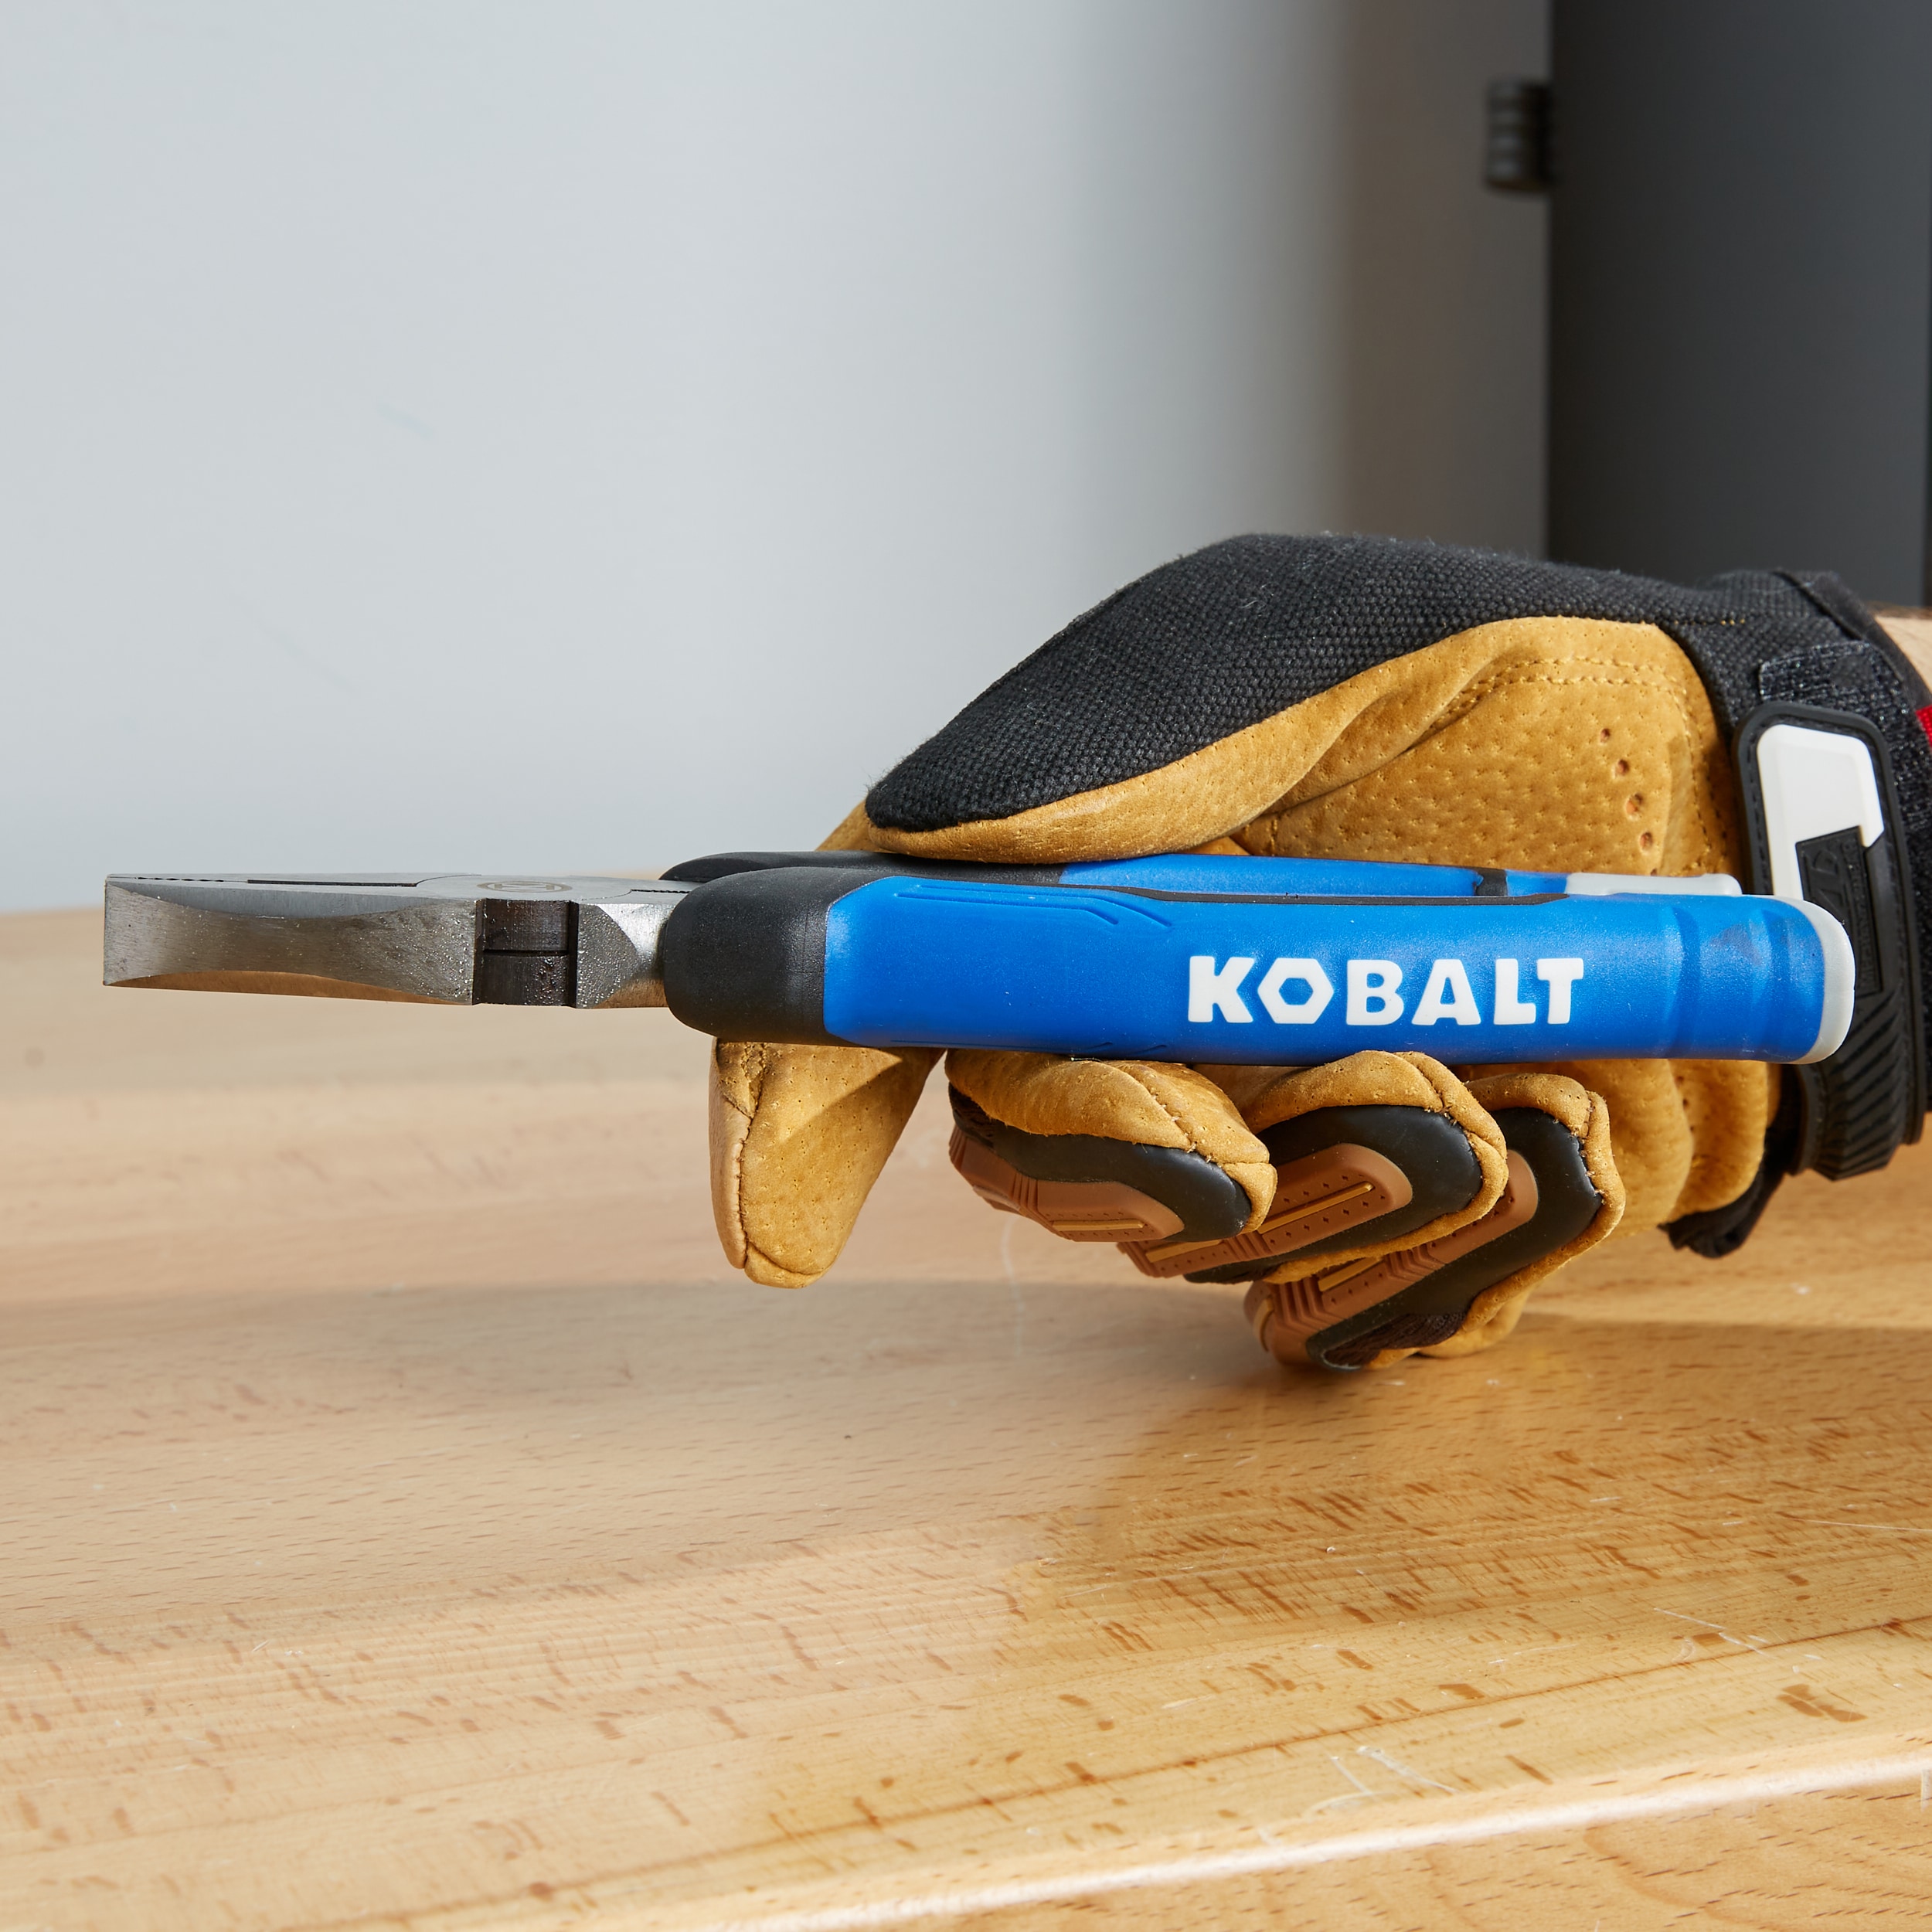 Kobalt 9-in Home Repair Lineman Pliers with Wire Cutter